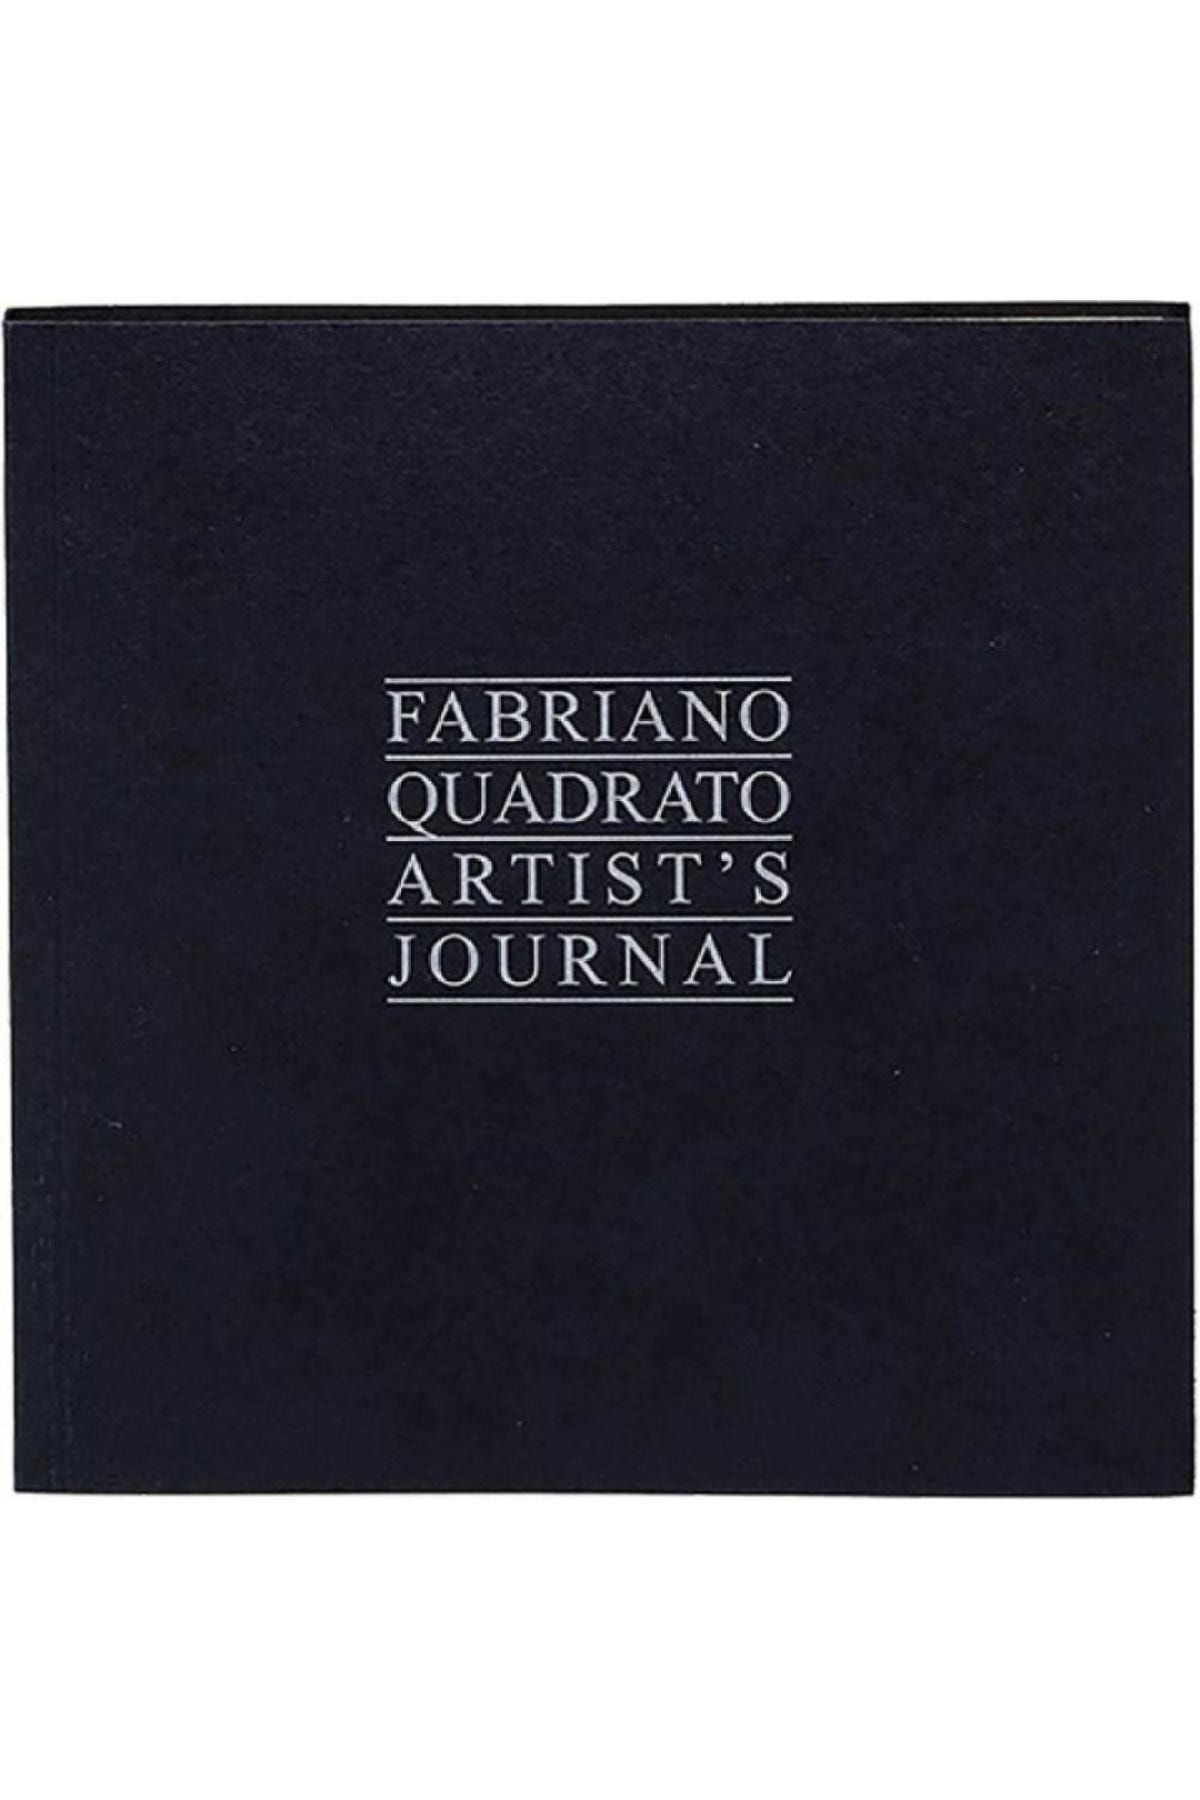 Fabriano Quadrato Artist's Journal 90gr Nero/siyah Kapak Çizim Defteri 96 Sayfa 23x23cm